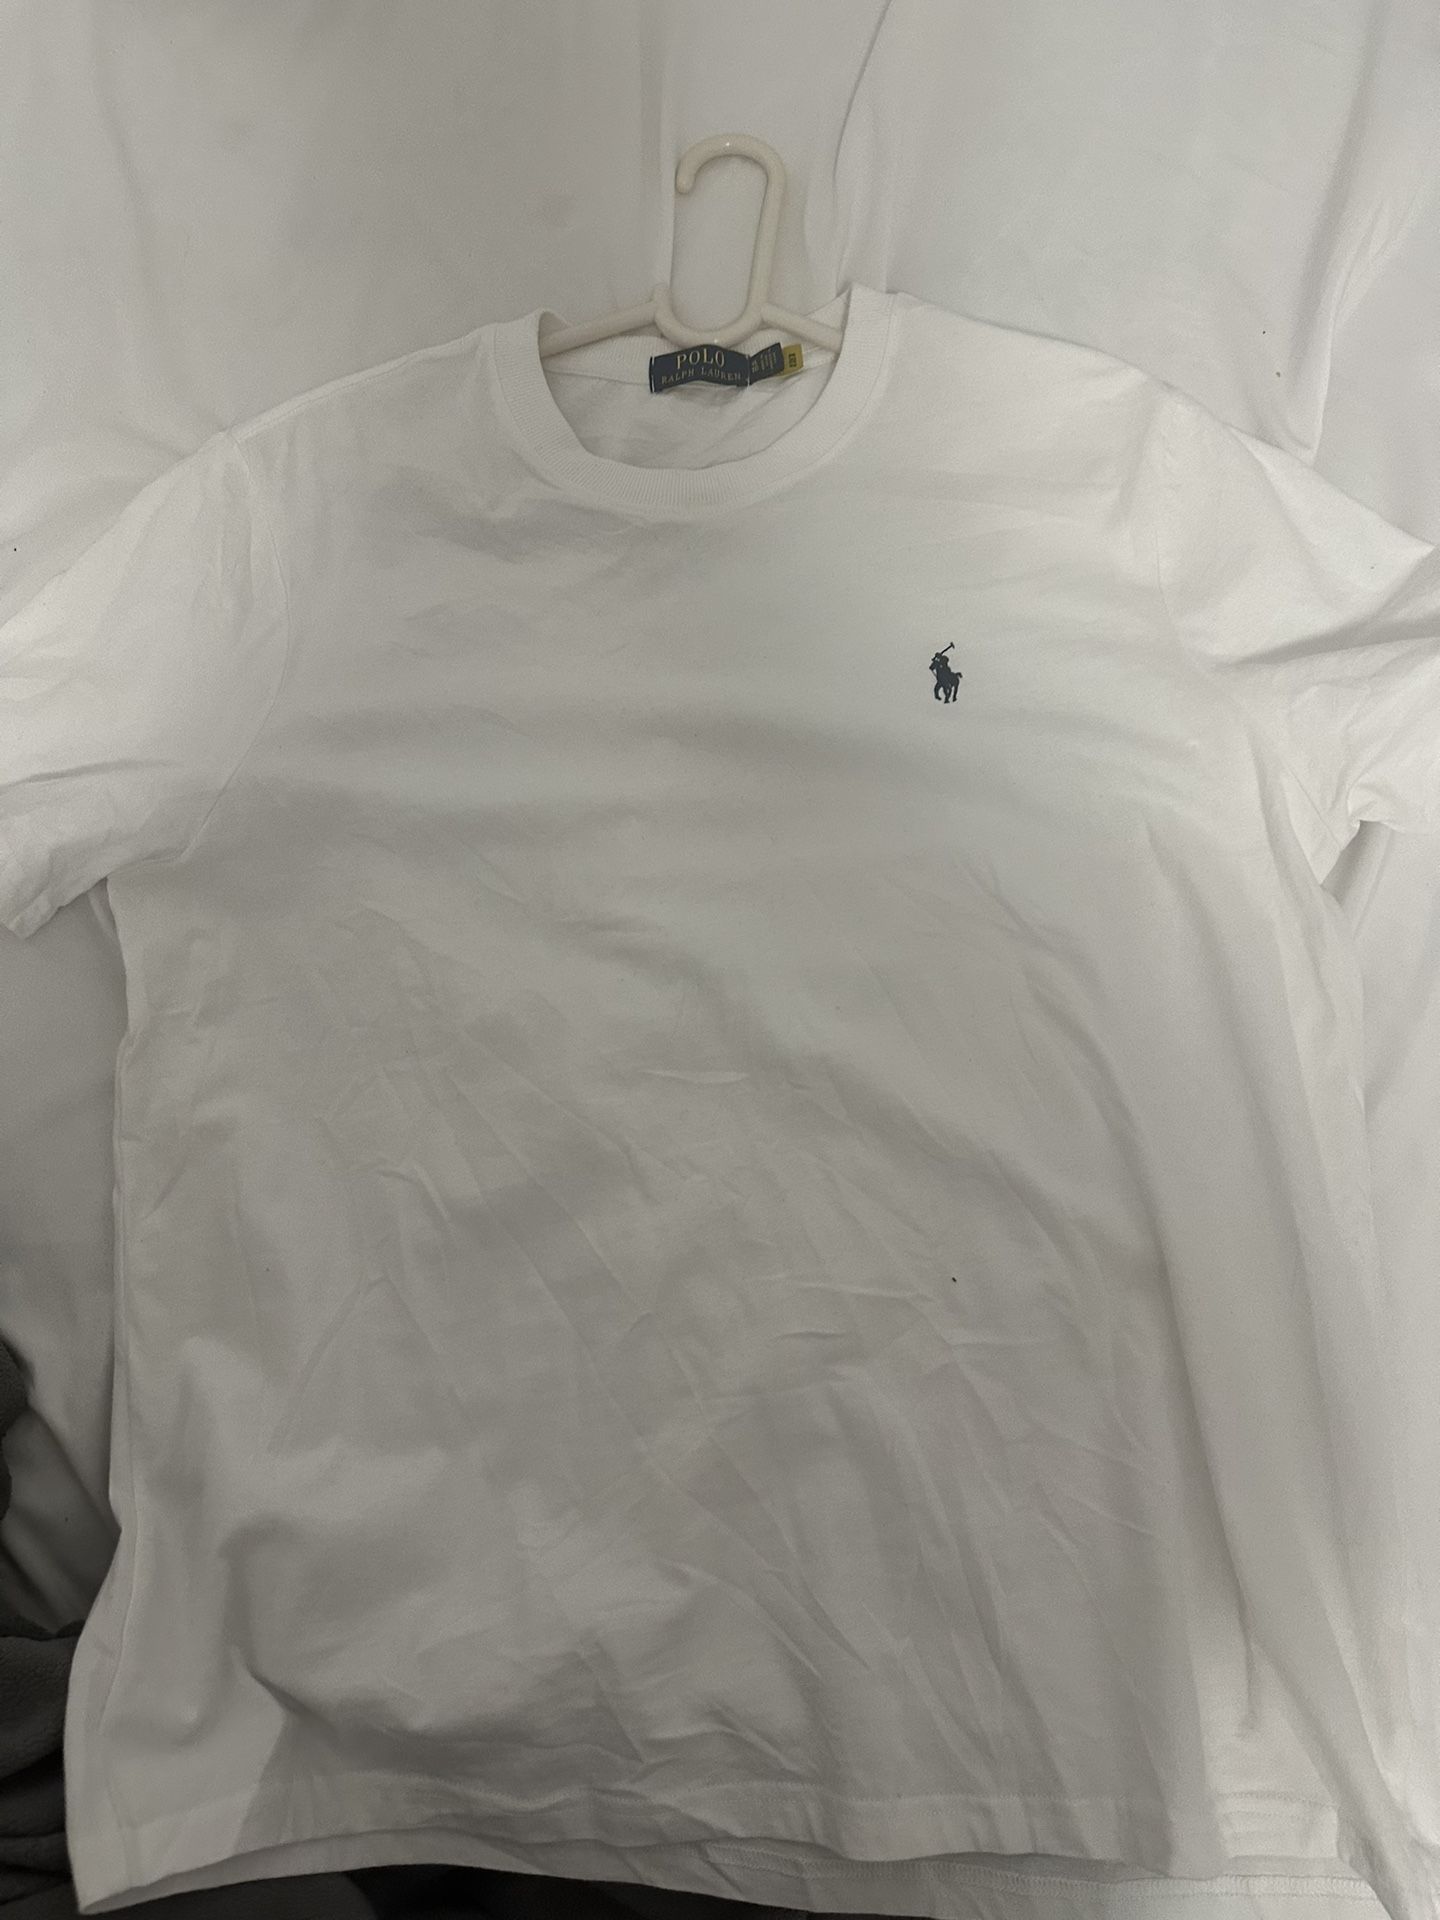 XL white polo ralph lauren shirt